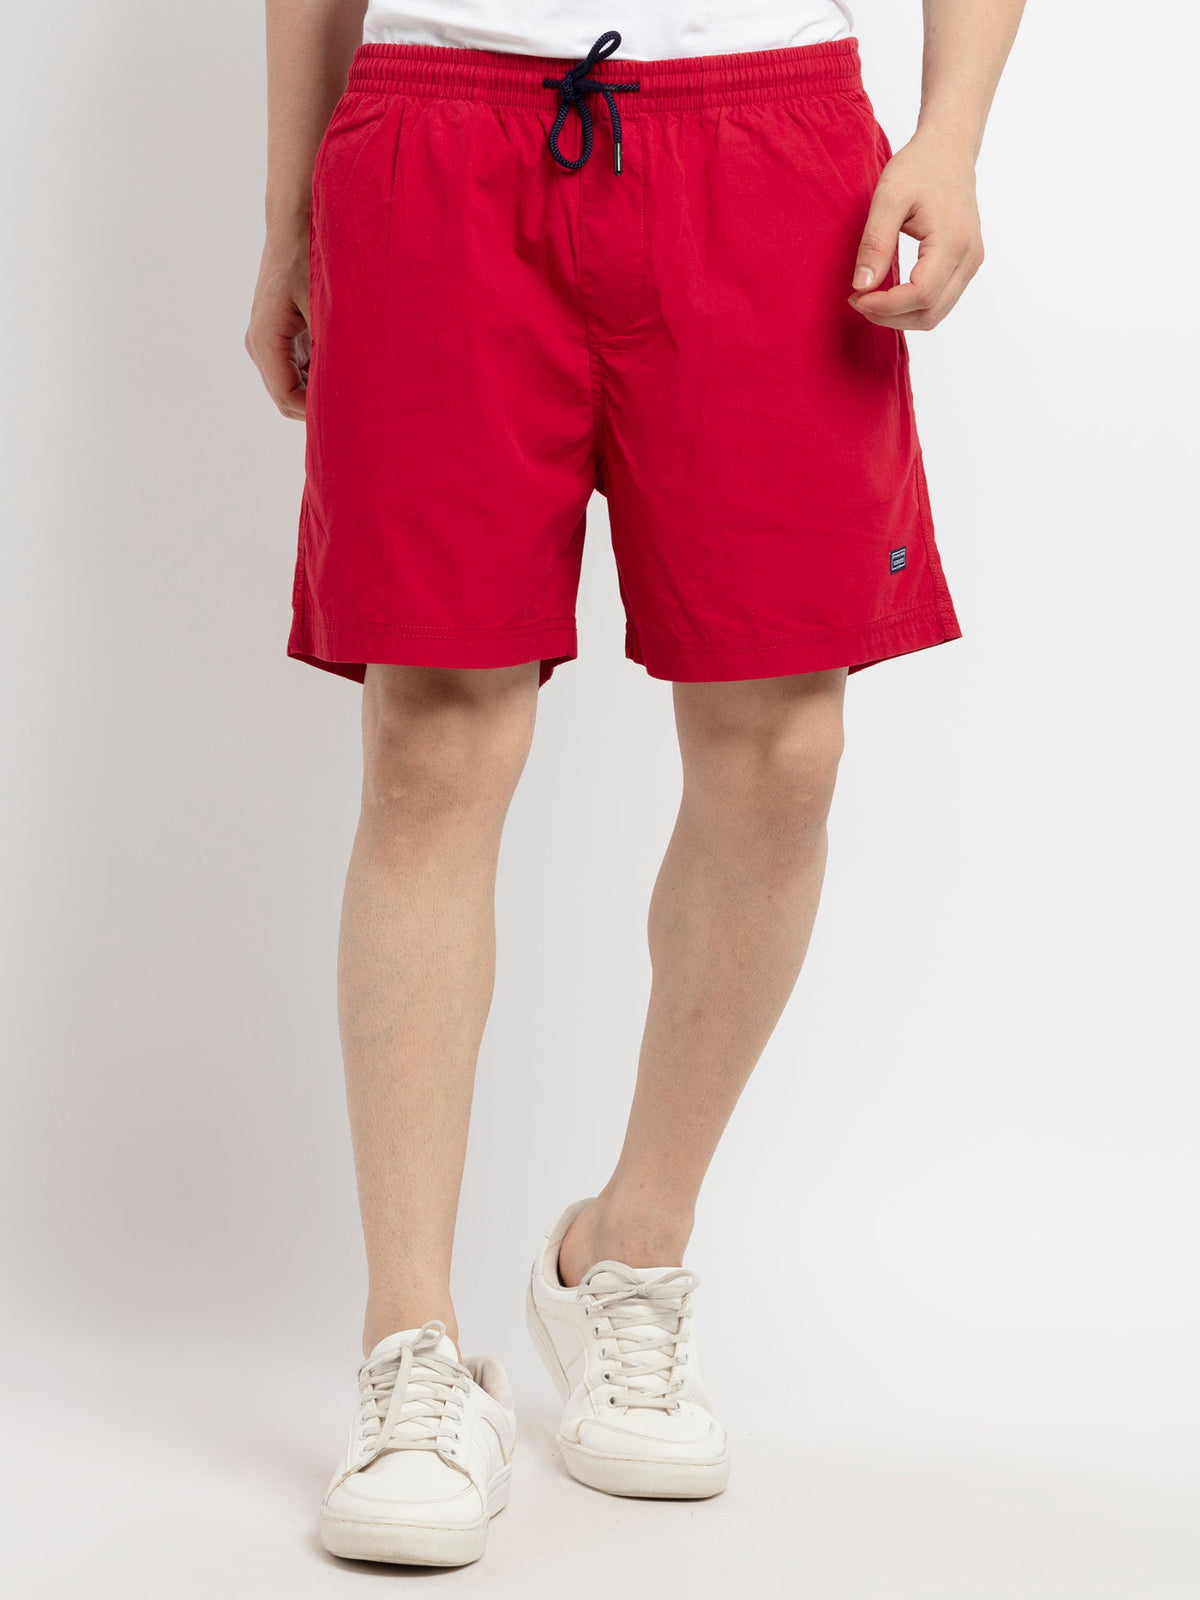 Status Quo |Men's Solid Shorts - S, M, L, XL, XXL